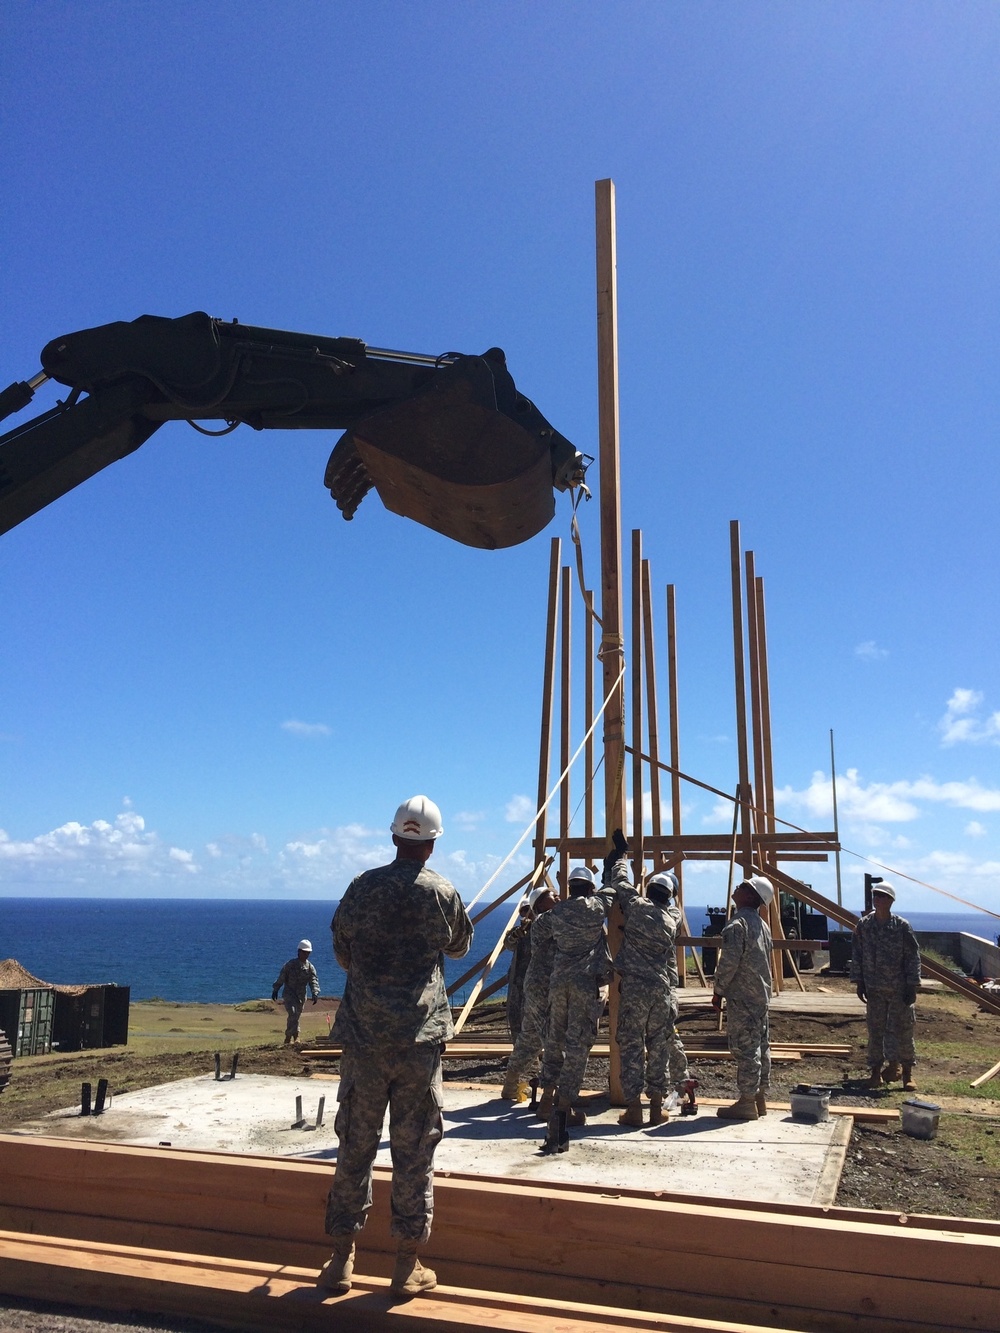 Pacific Army Engineers support Marines, revamp Hawaii firing range